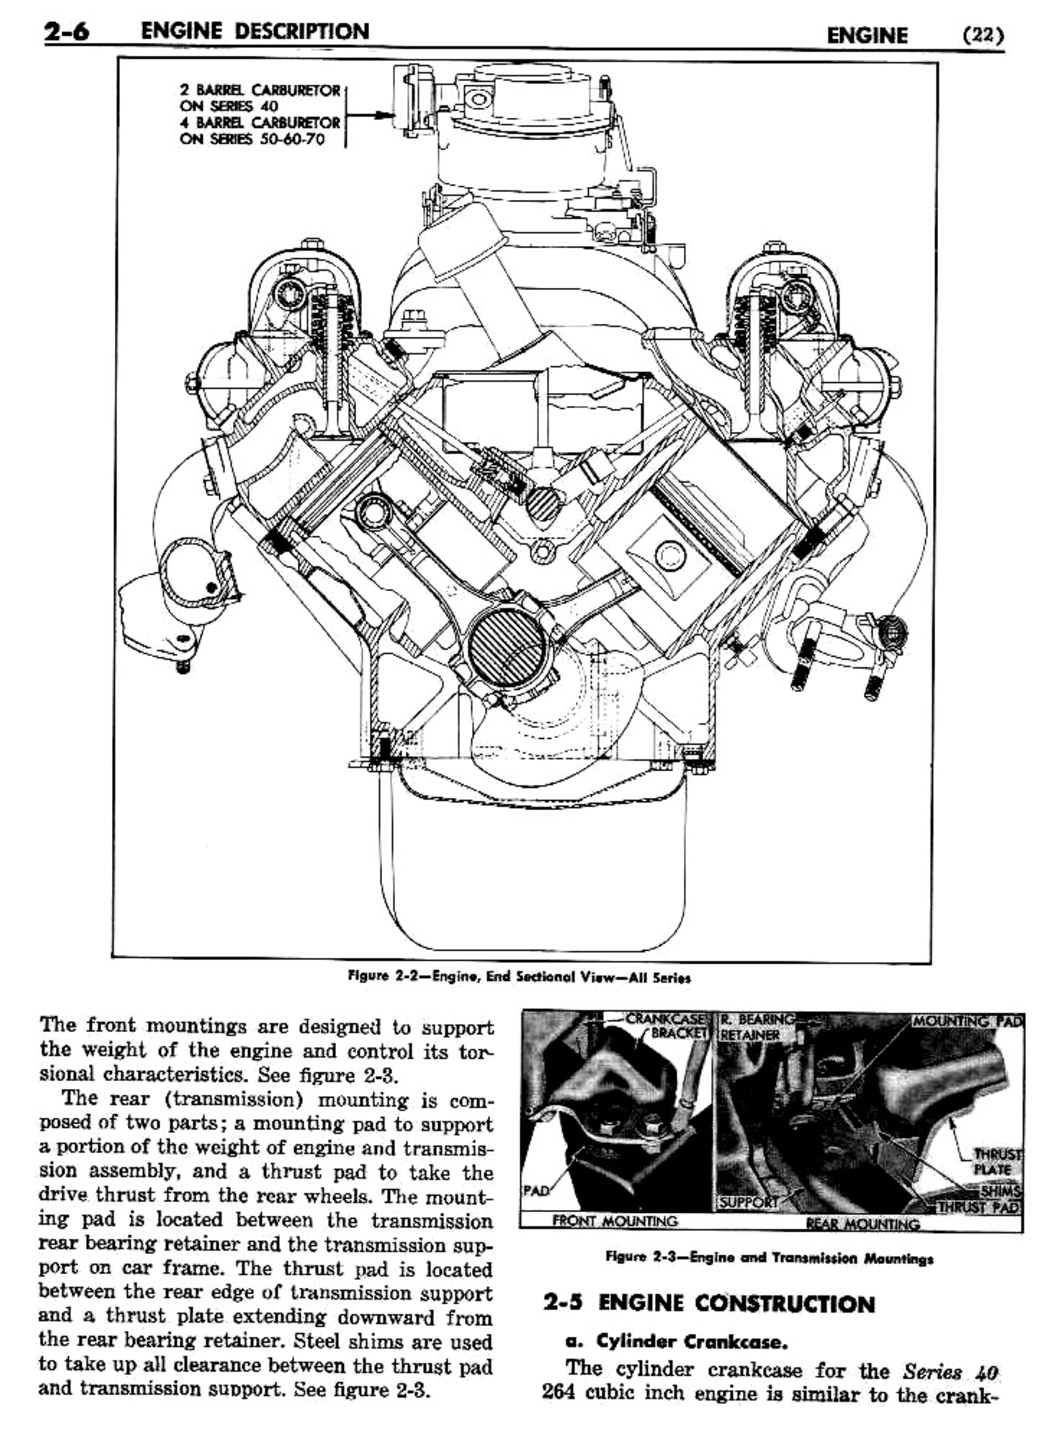 n_03 1955 Buick Shop Manual - Engine-006-006.jpg